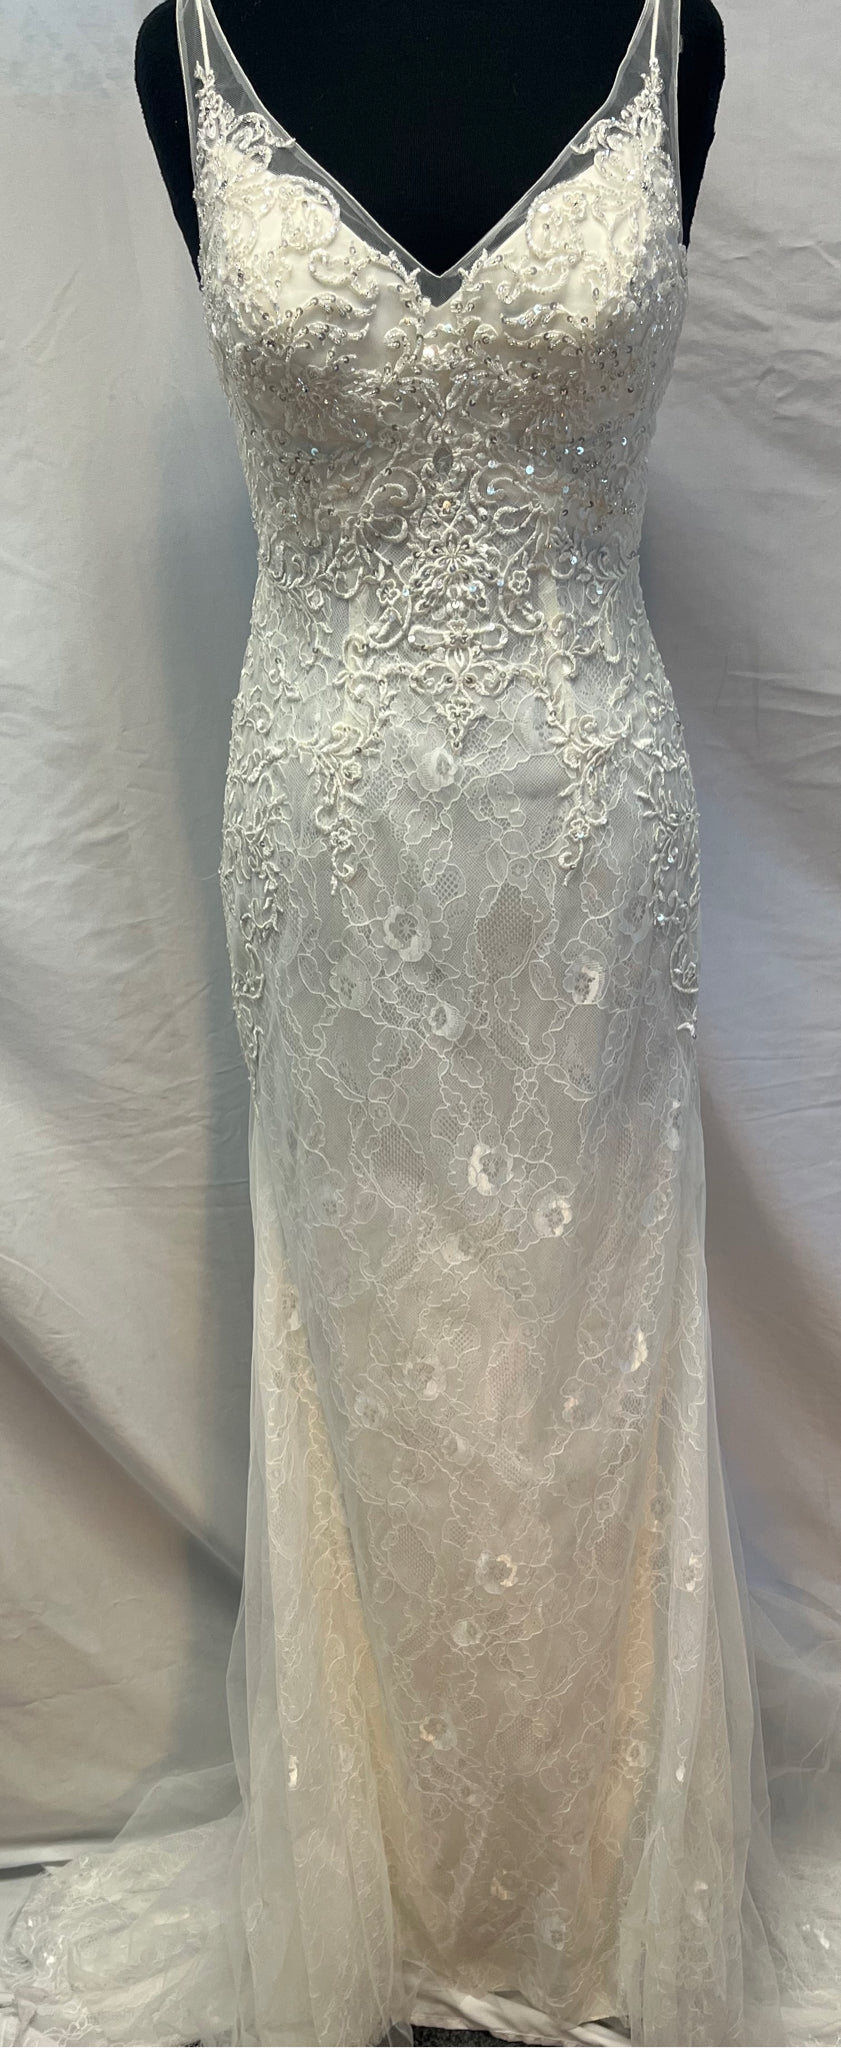 Women's Size 3/4 Signature Wedding Gown White Dress